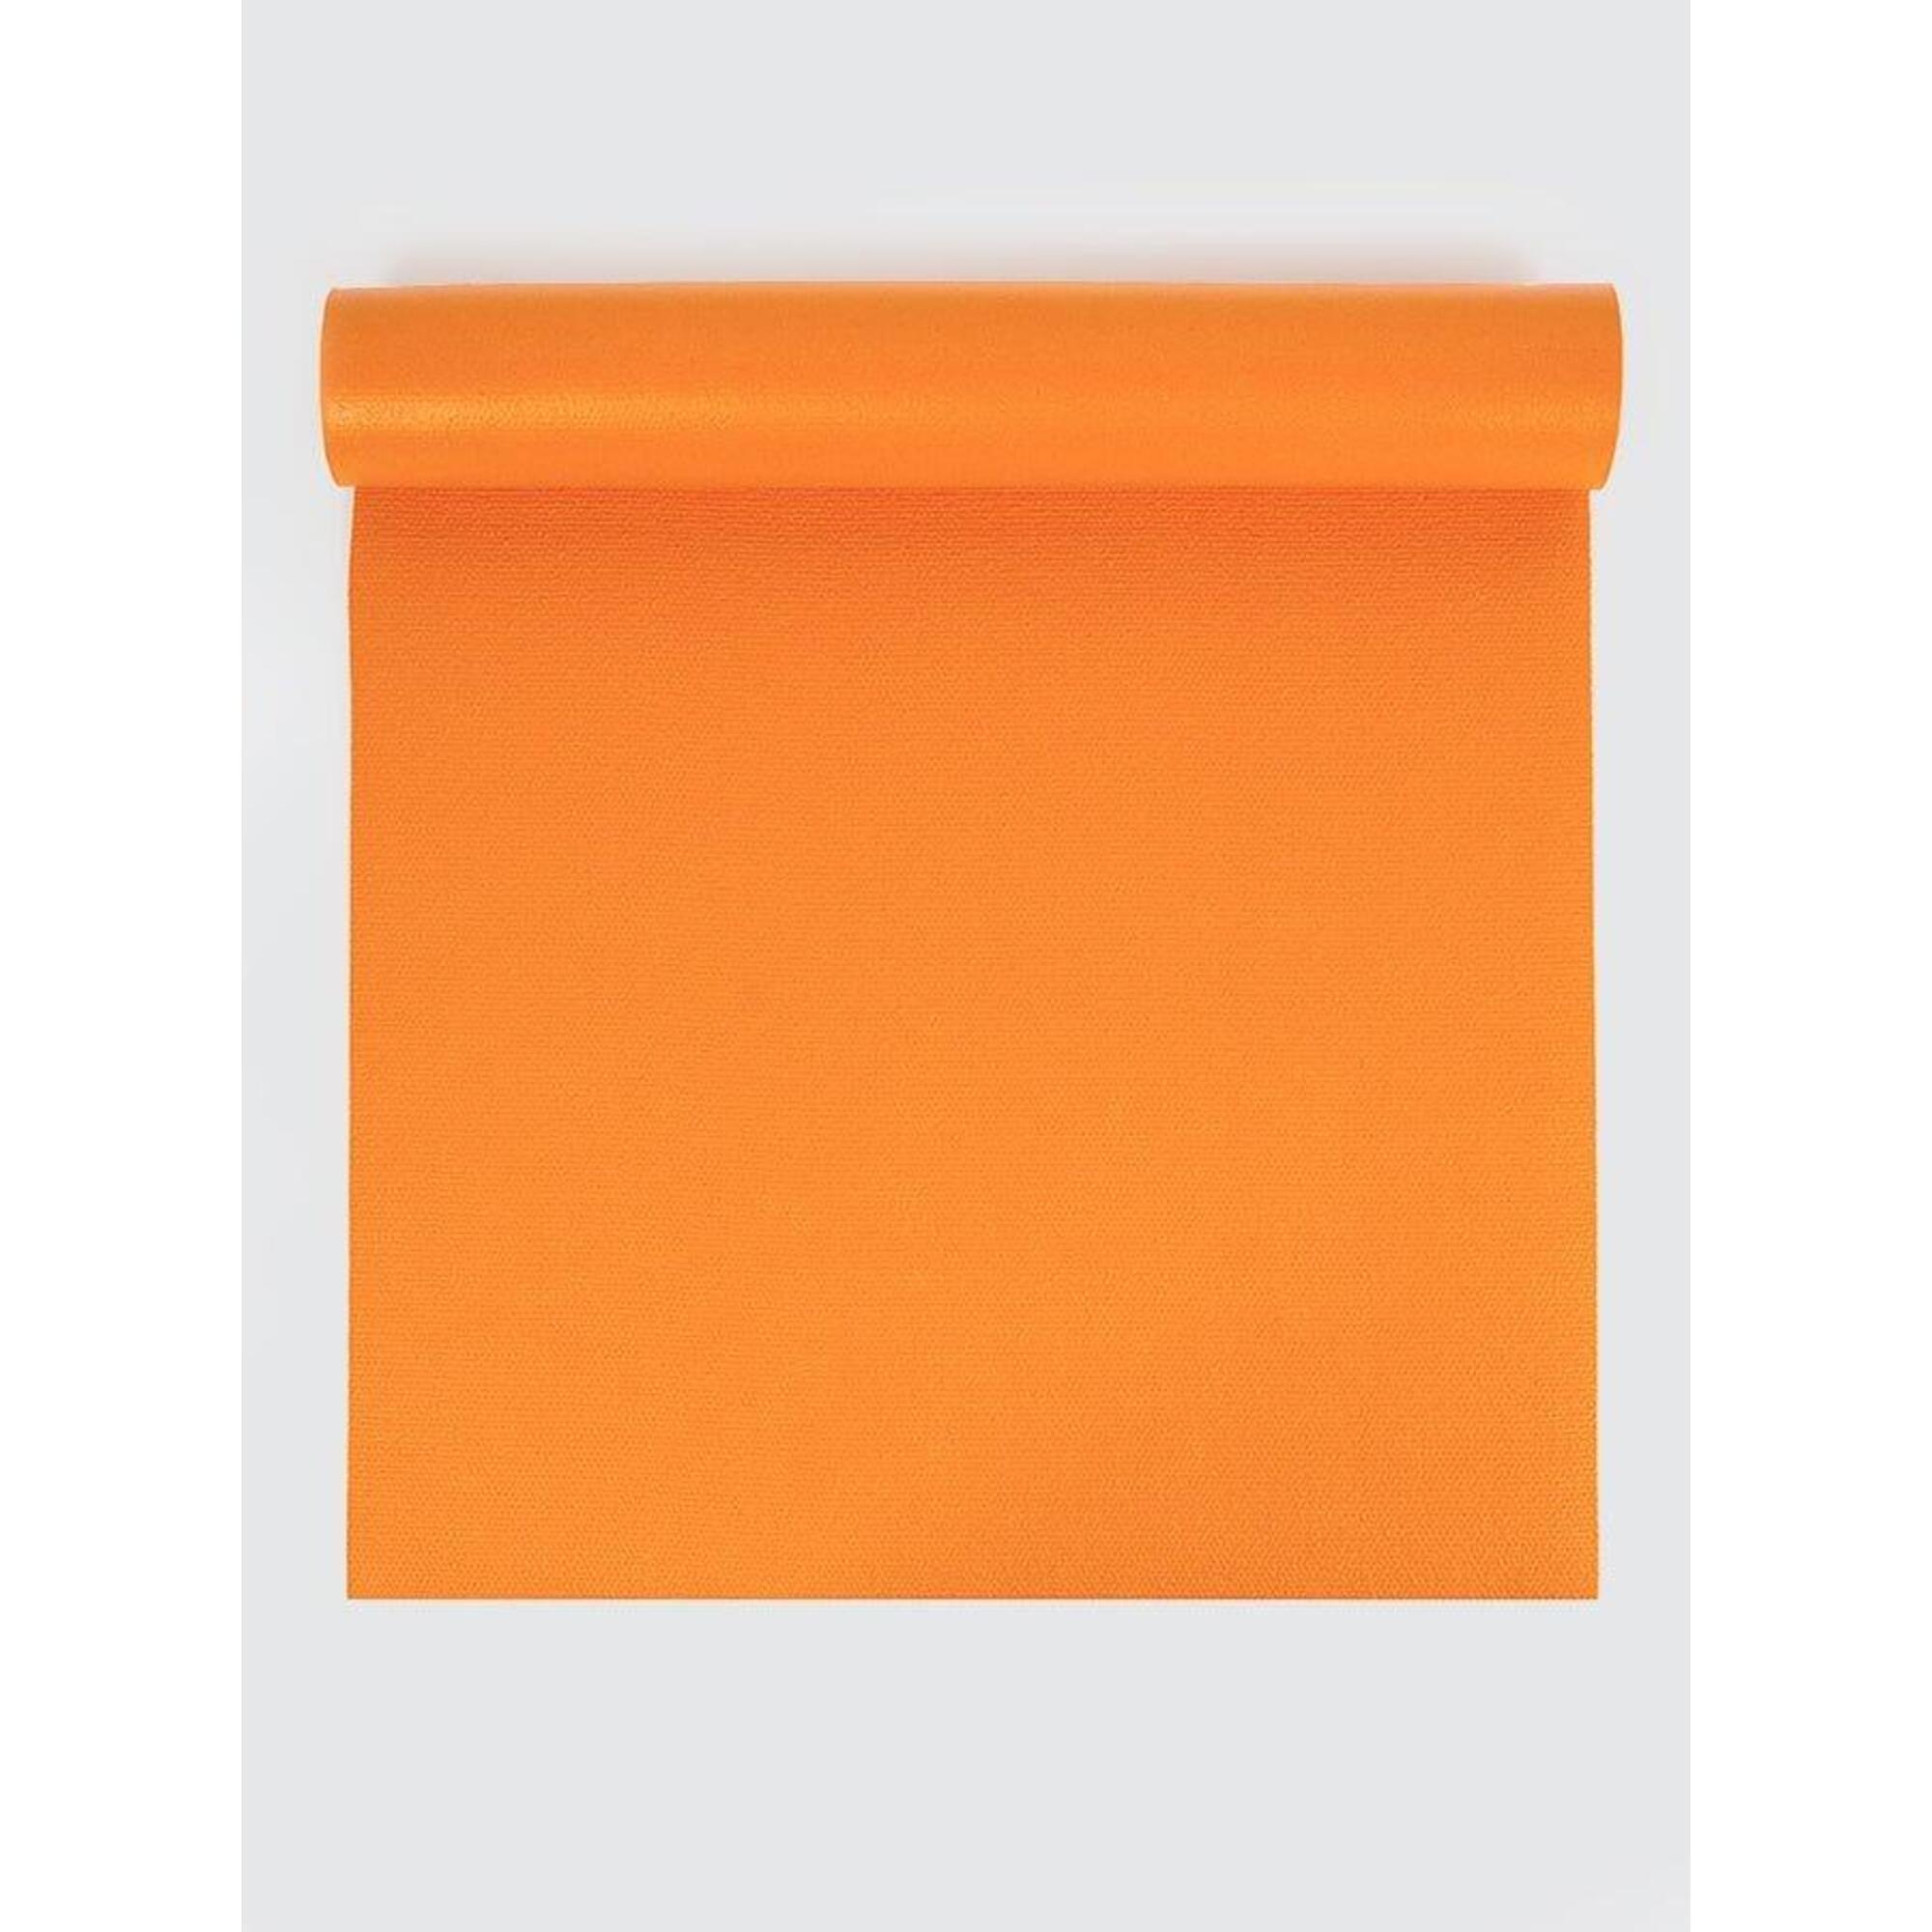 YOGA STUDIO Yoga Studio Oeko-Tex Extra Long Yoga Mat 4.5mm - Tangerine Orange